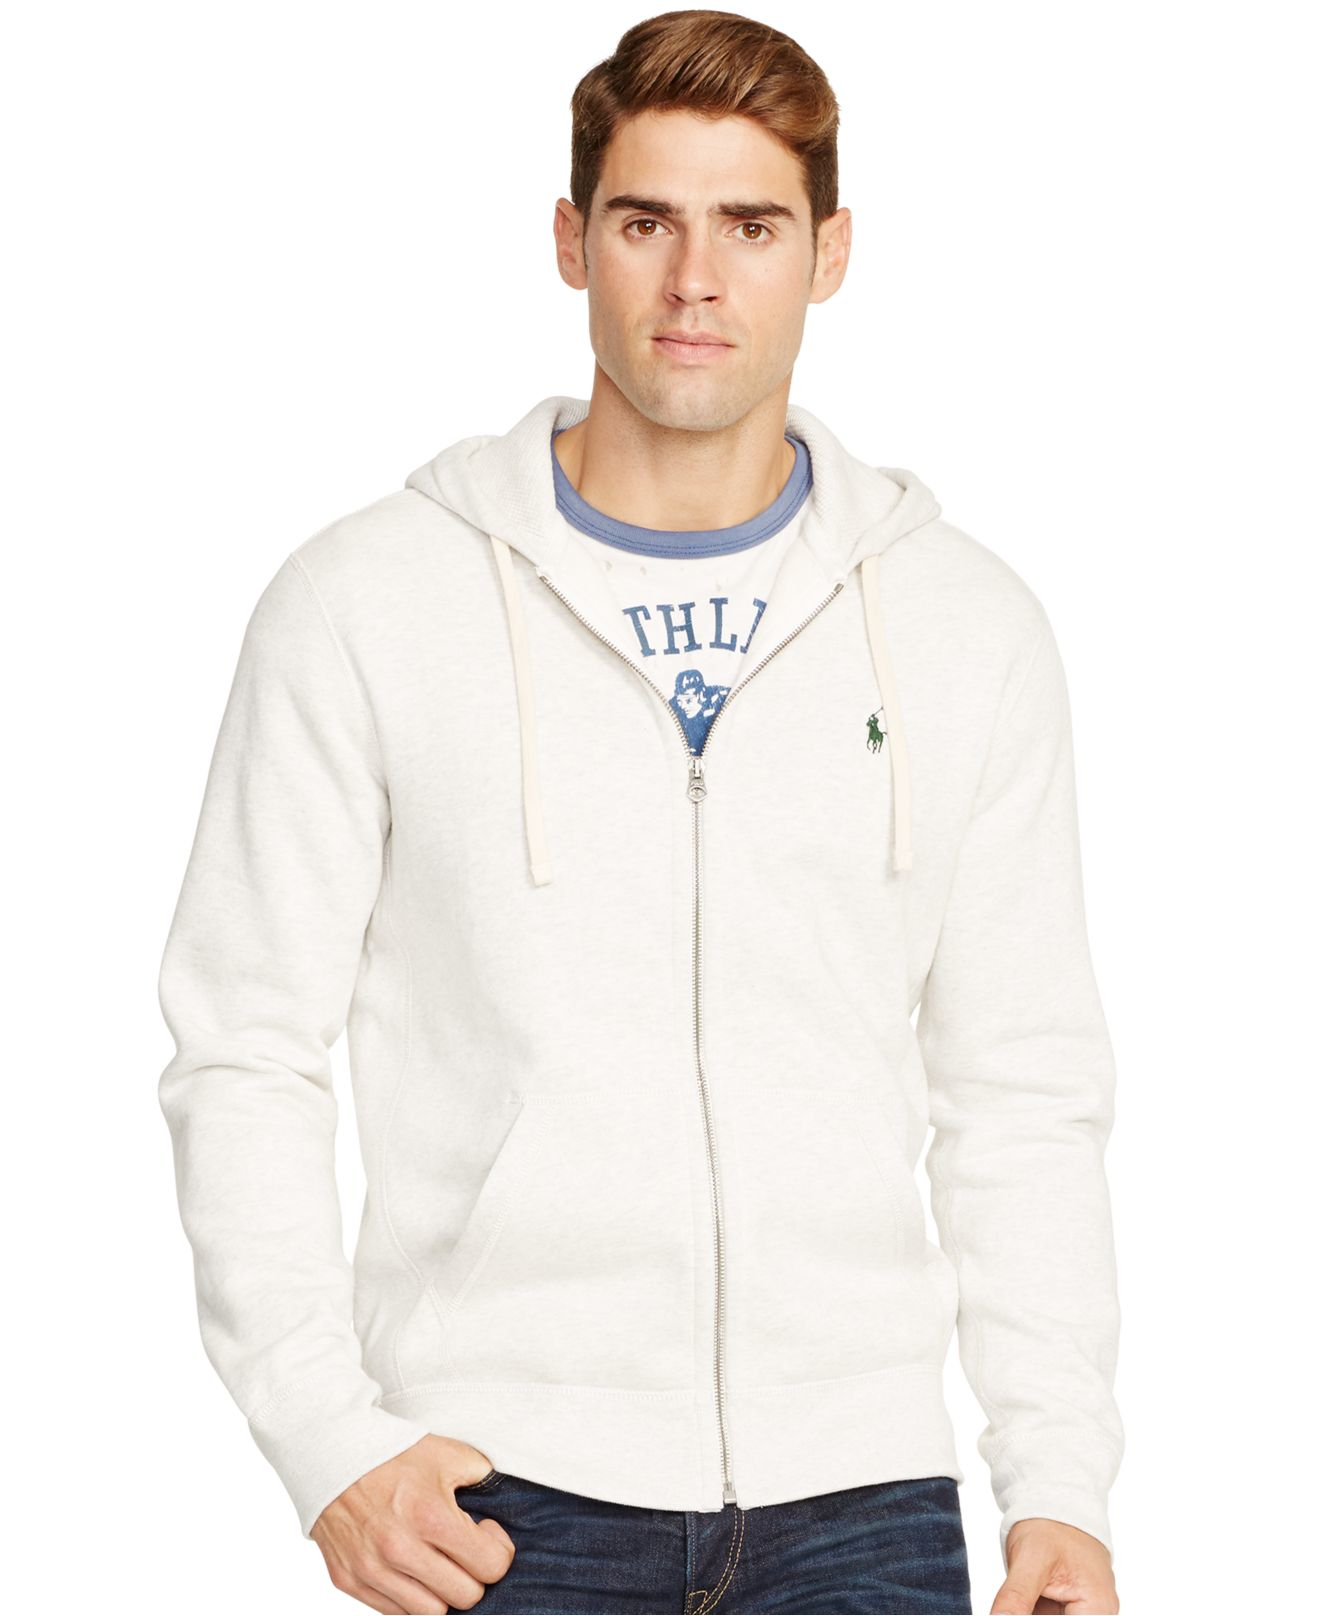 Polo Ralph Lauren Full-zip Hoodie in White for Men - Lyst